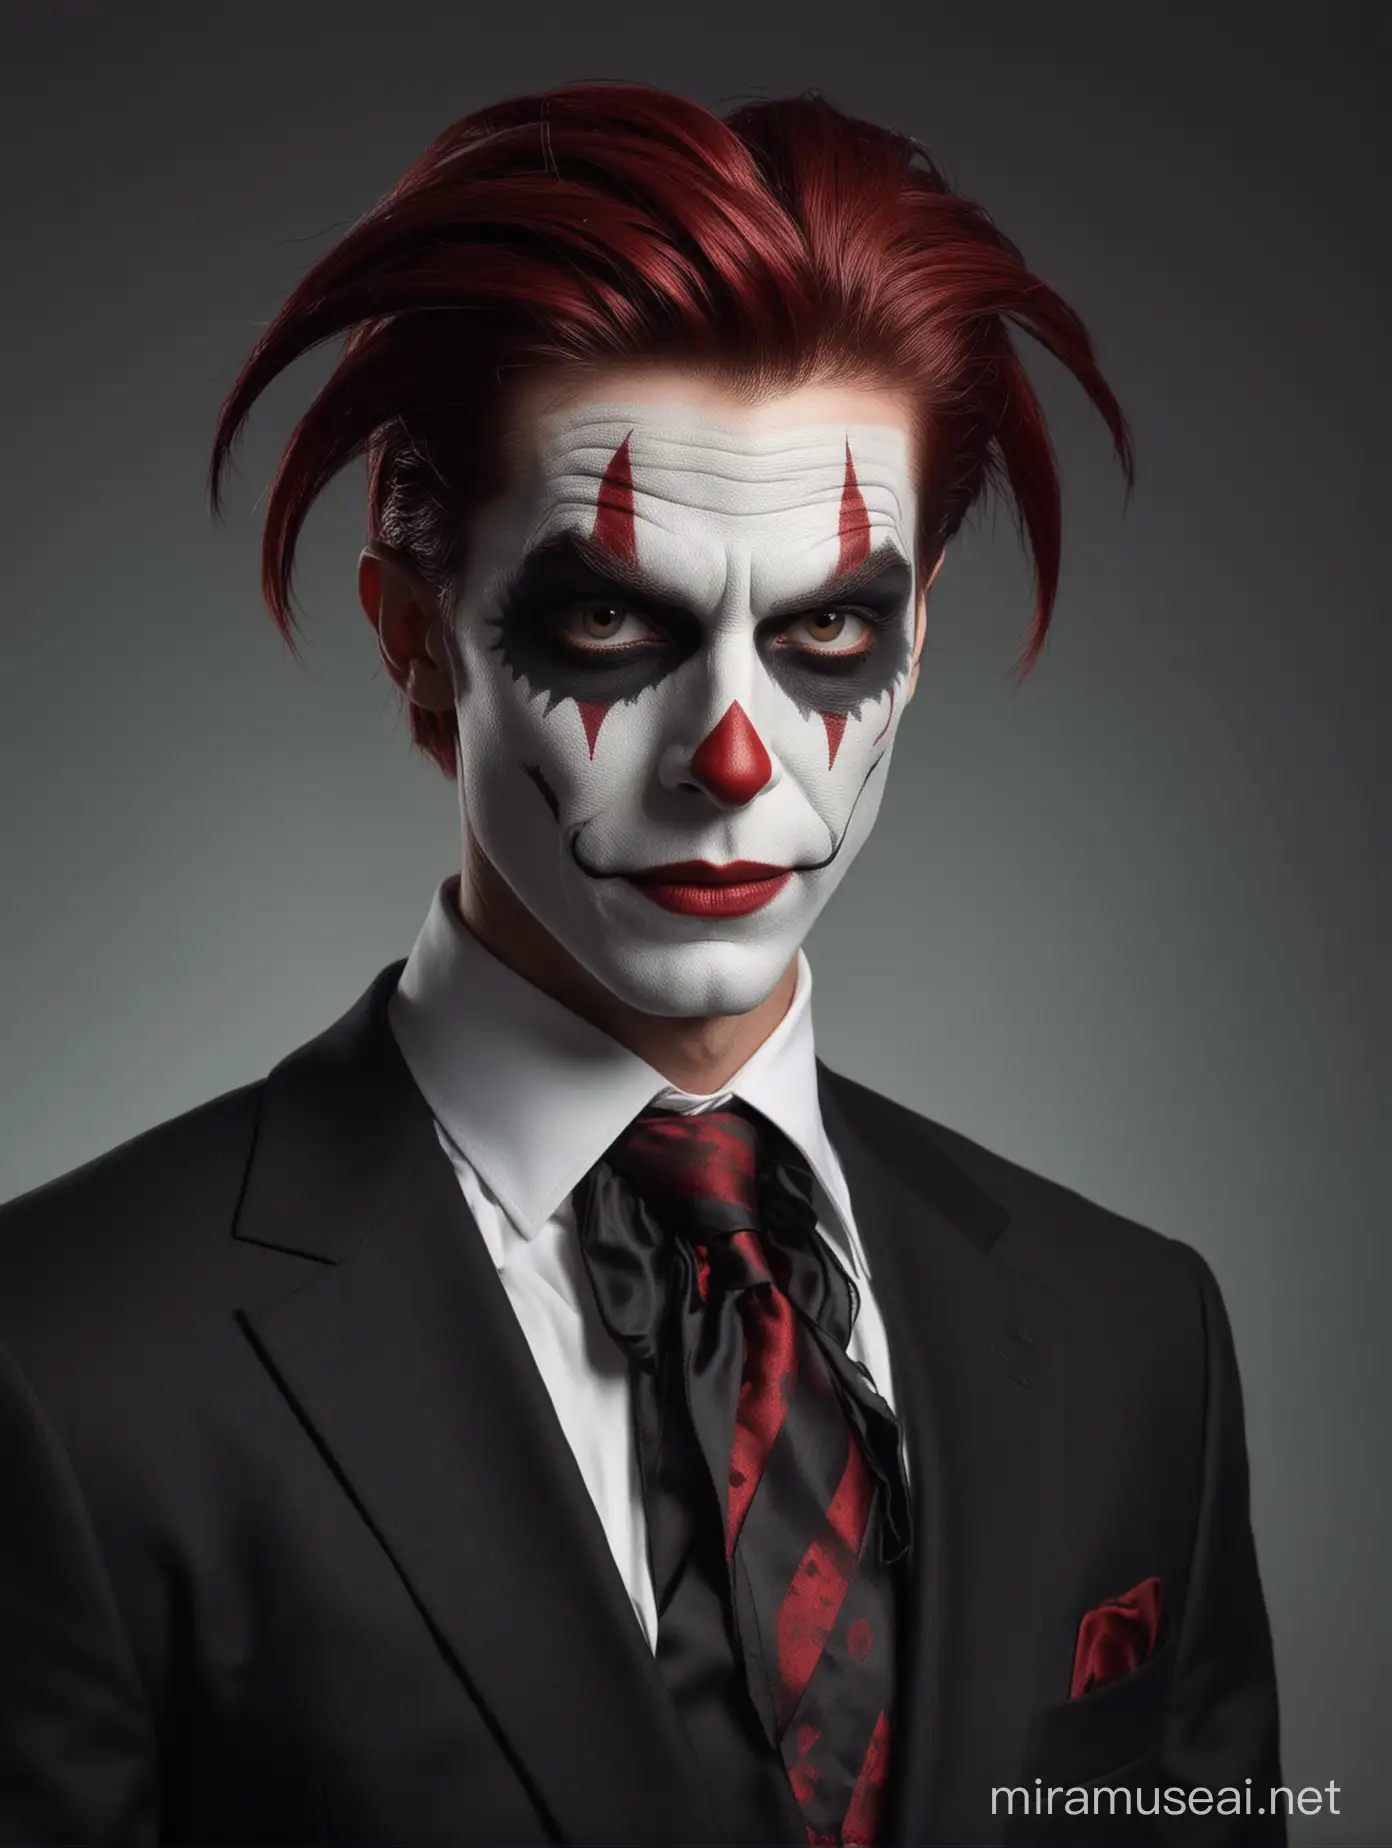 creepy jester,medium short slicked dark red hair,black buisness suit